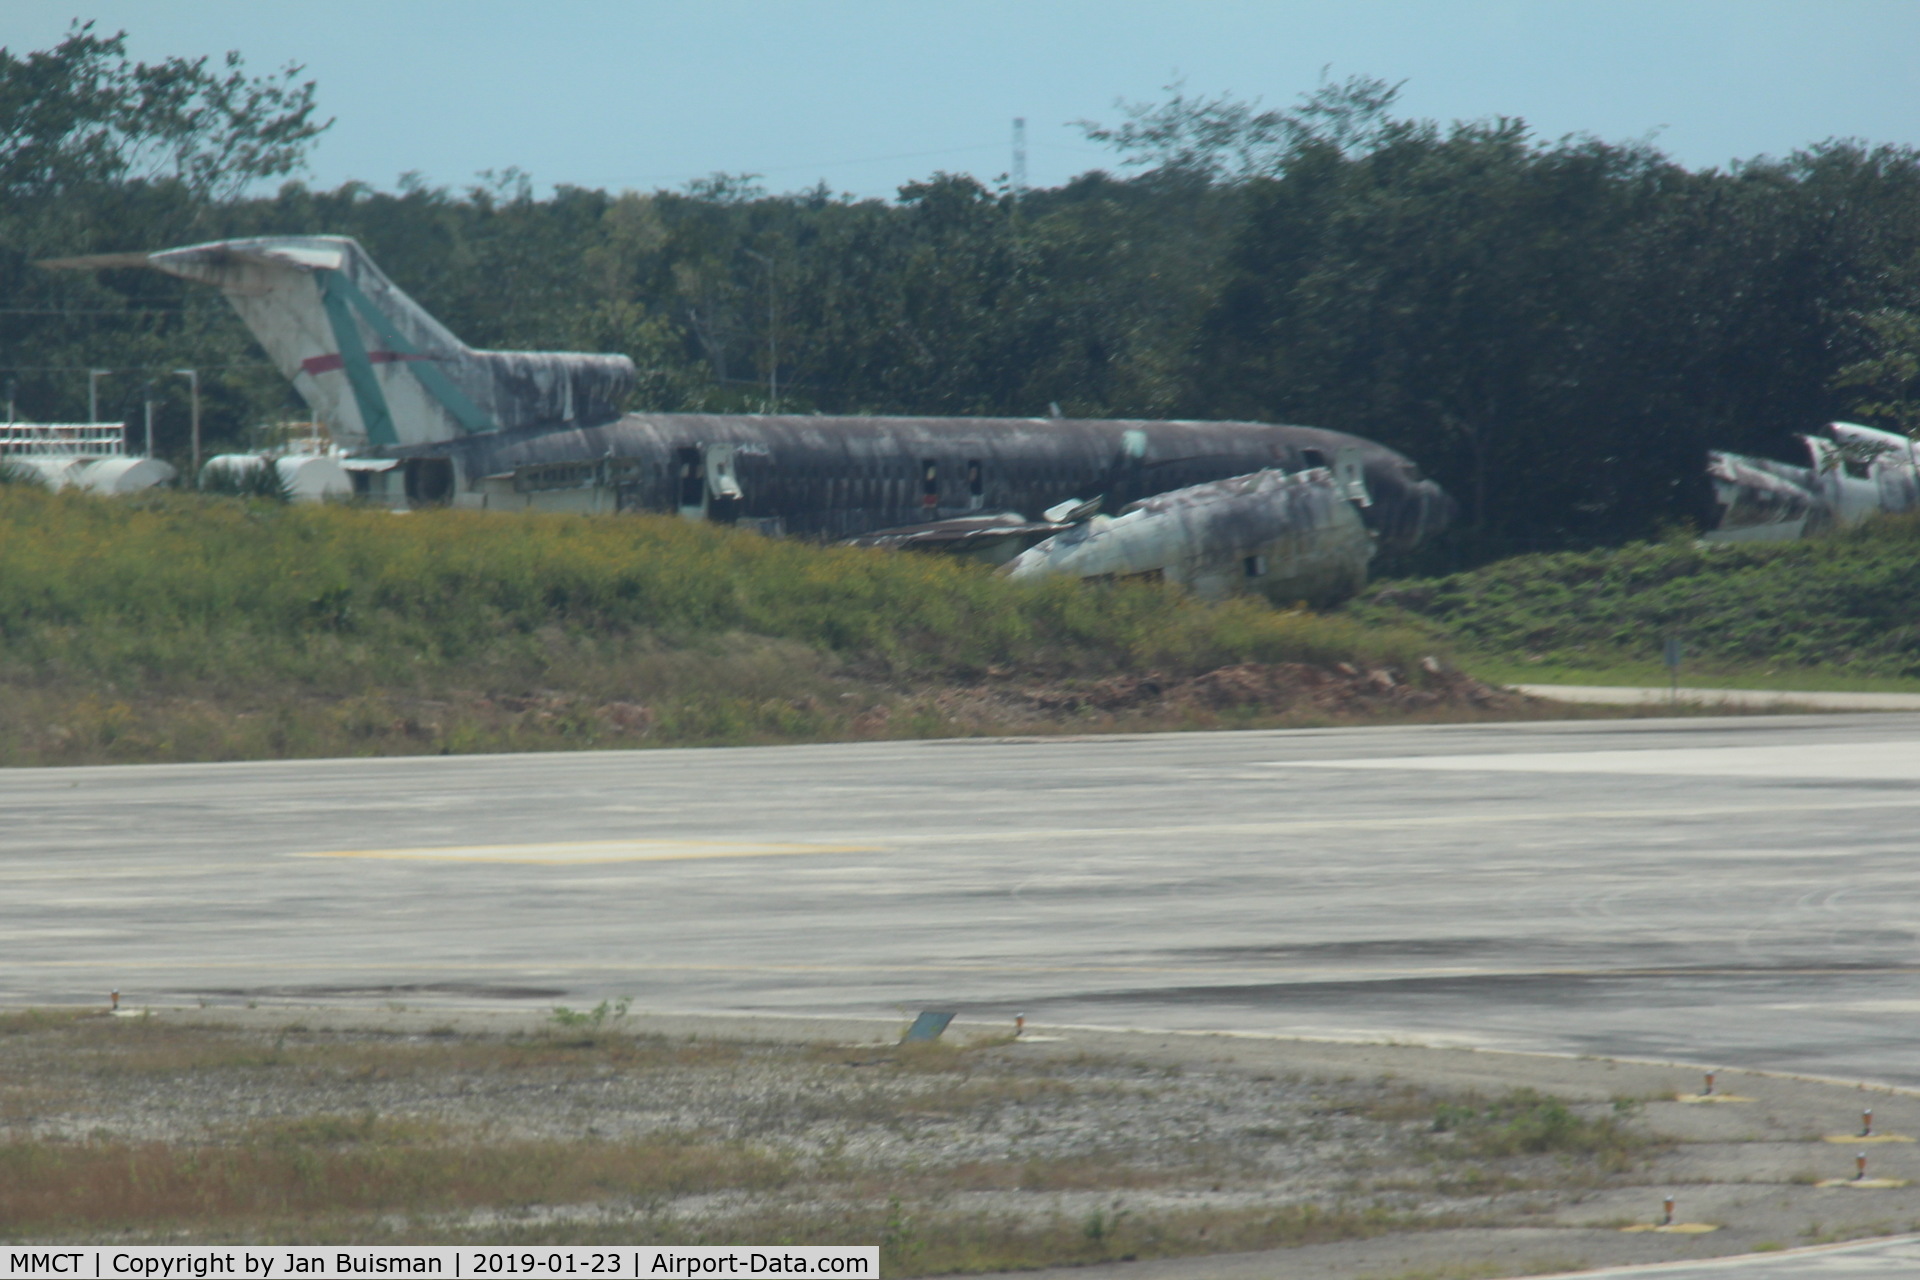 Chichen Itza International Airport, Chichen Itza, Yucatán Mexico (MMCT) - remains of Boeing 727 XA-AAQ (N935PG)